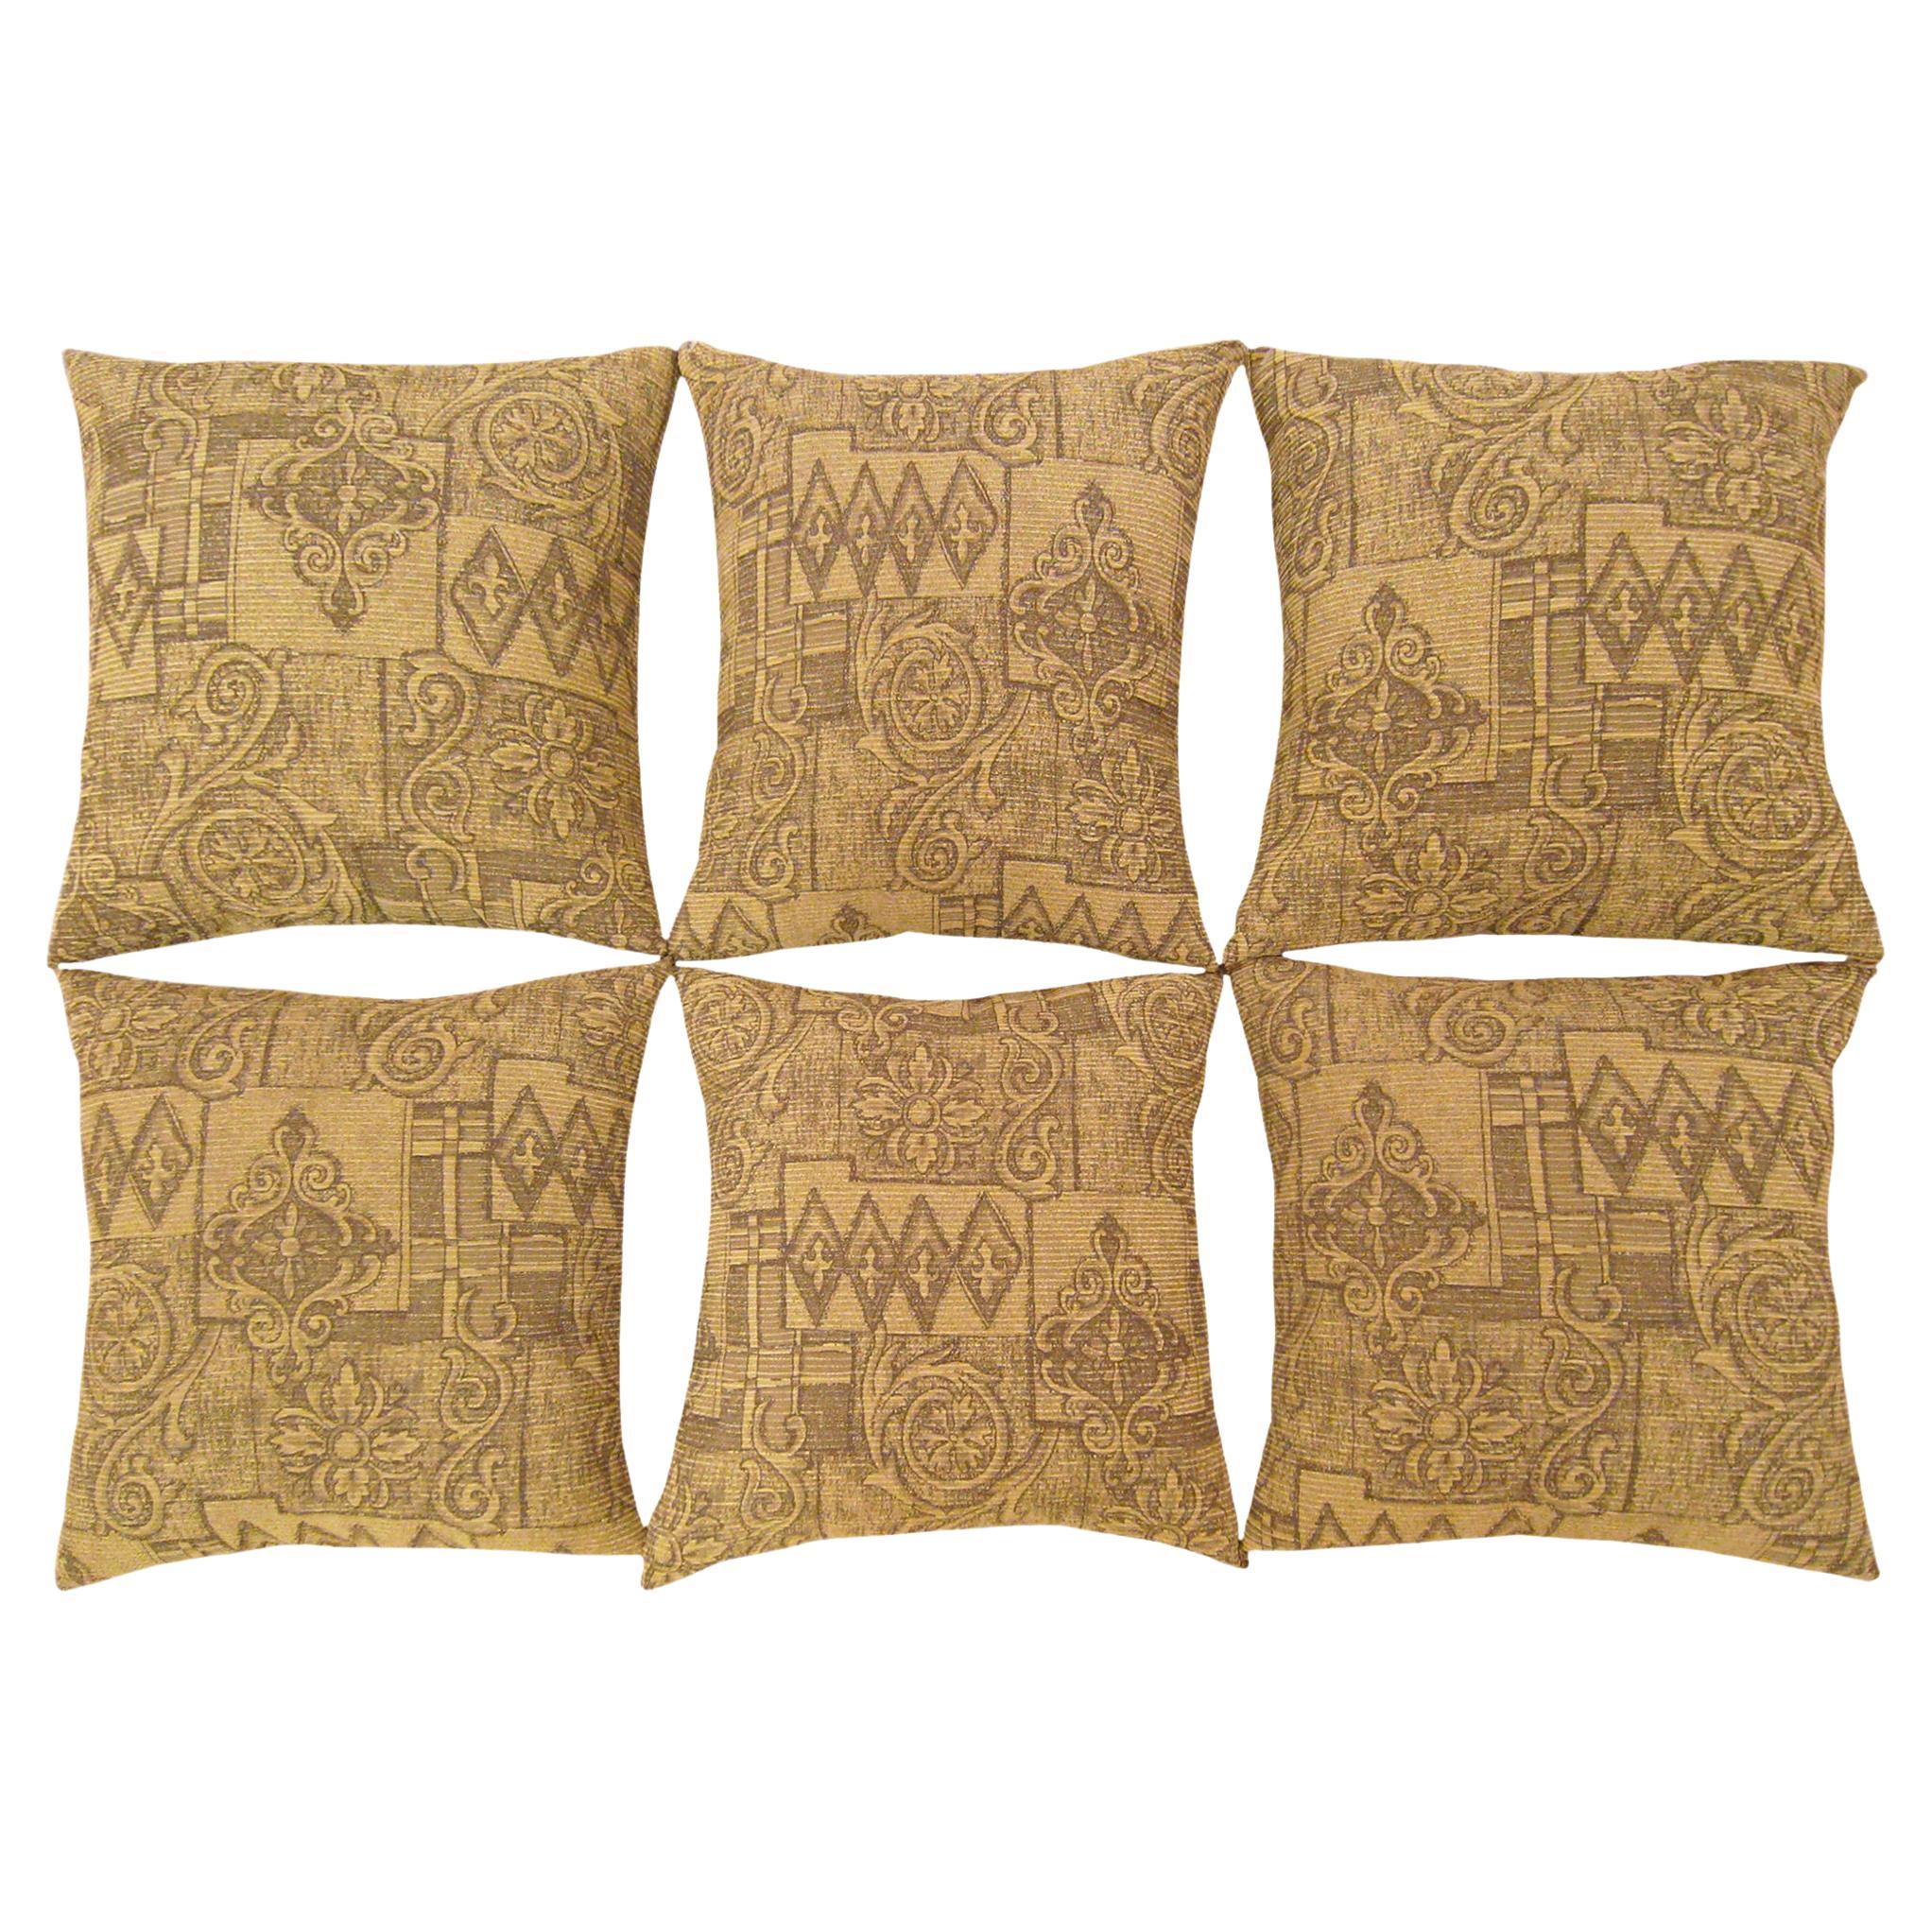 Set of Decorative Vintage Floro-Geometric Fabric Pillows